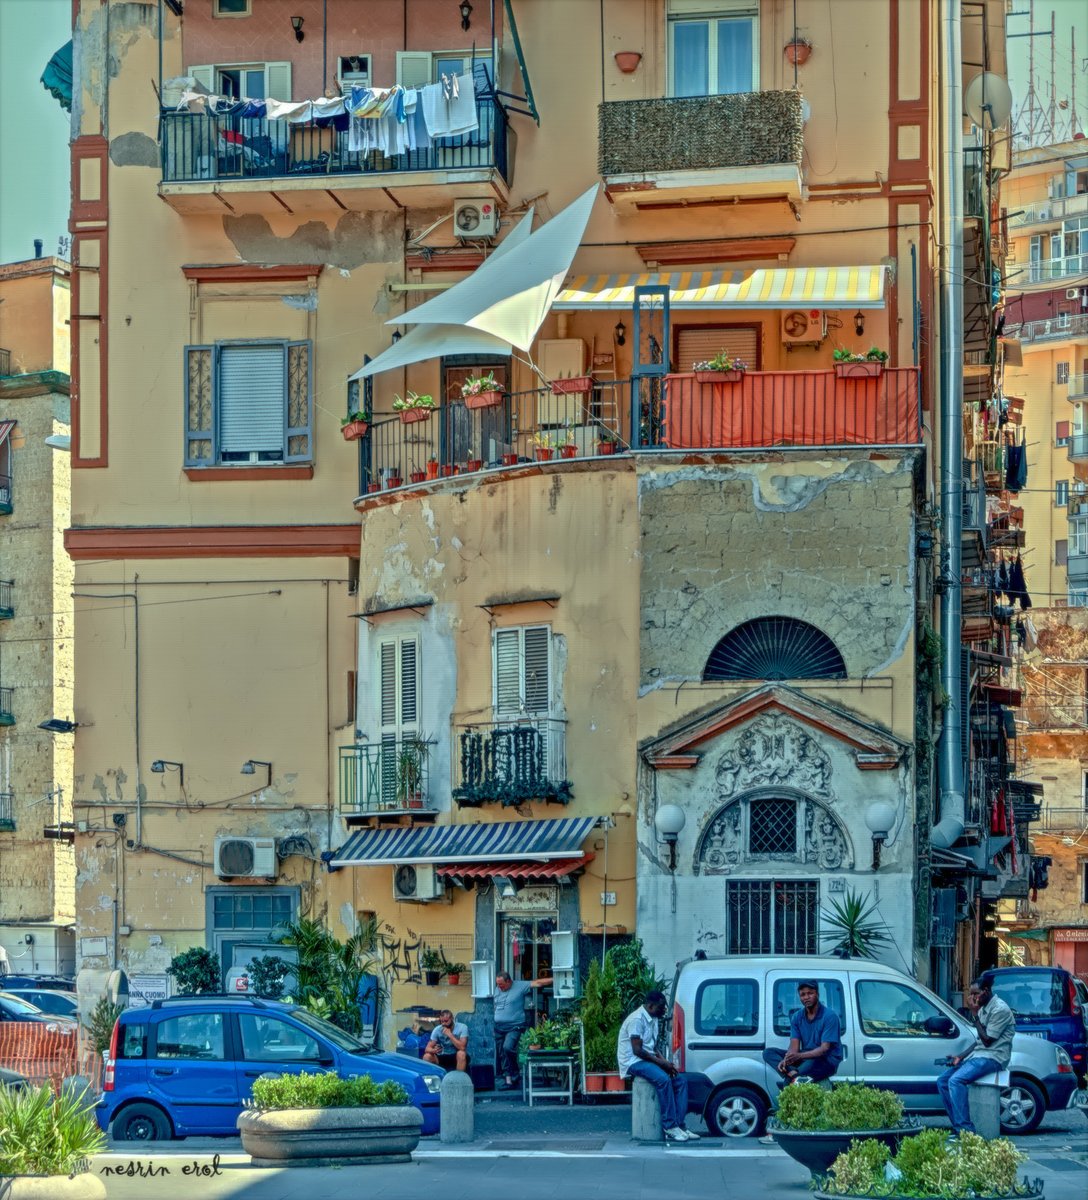 #StreetSunday #napoliitaly #naplesstreets #italianlifestyle #streetphotography #balconies #facade